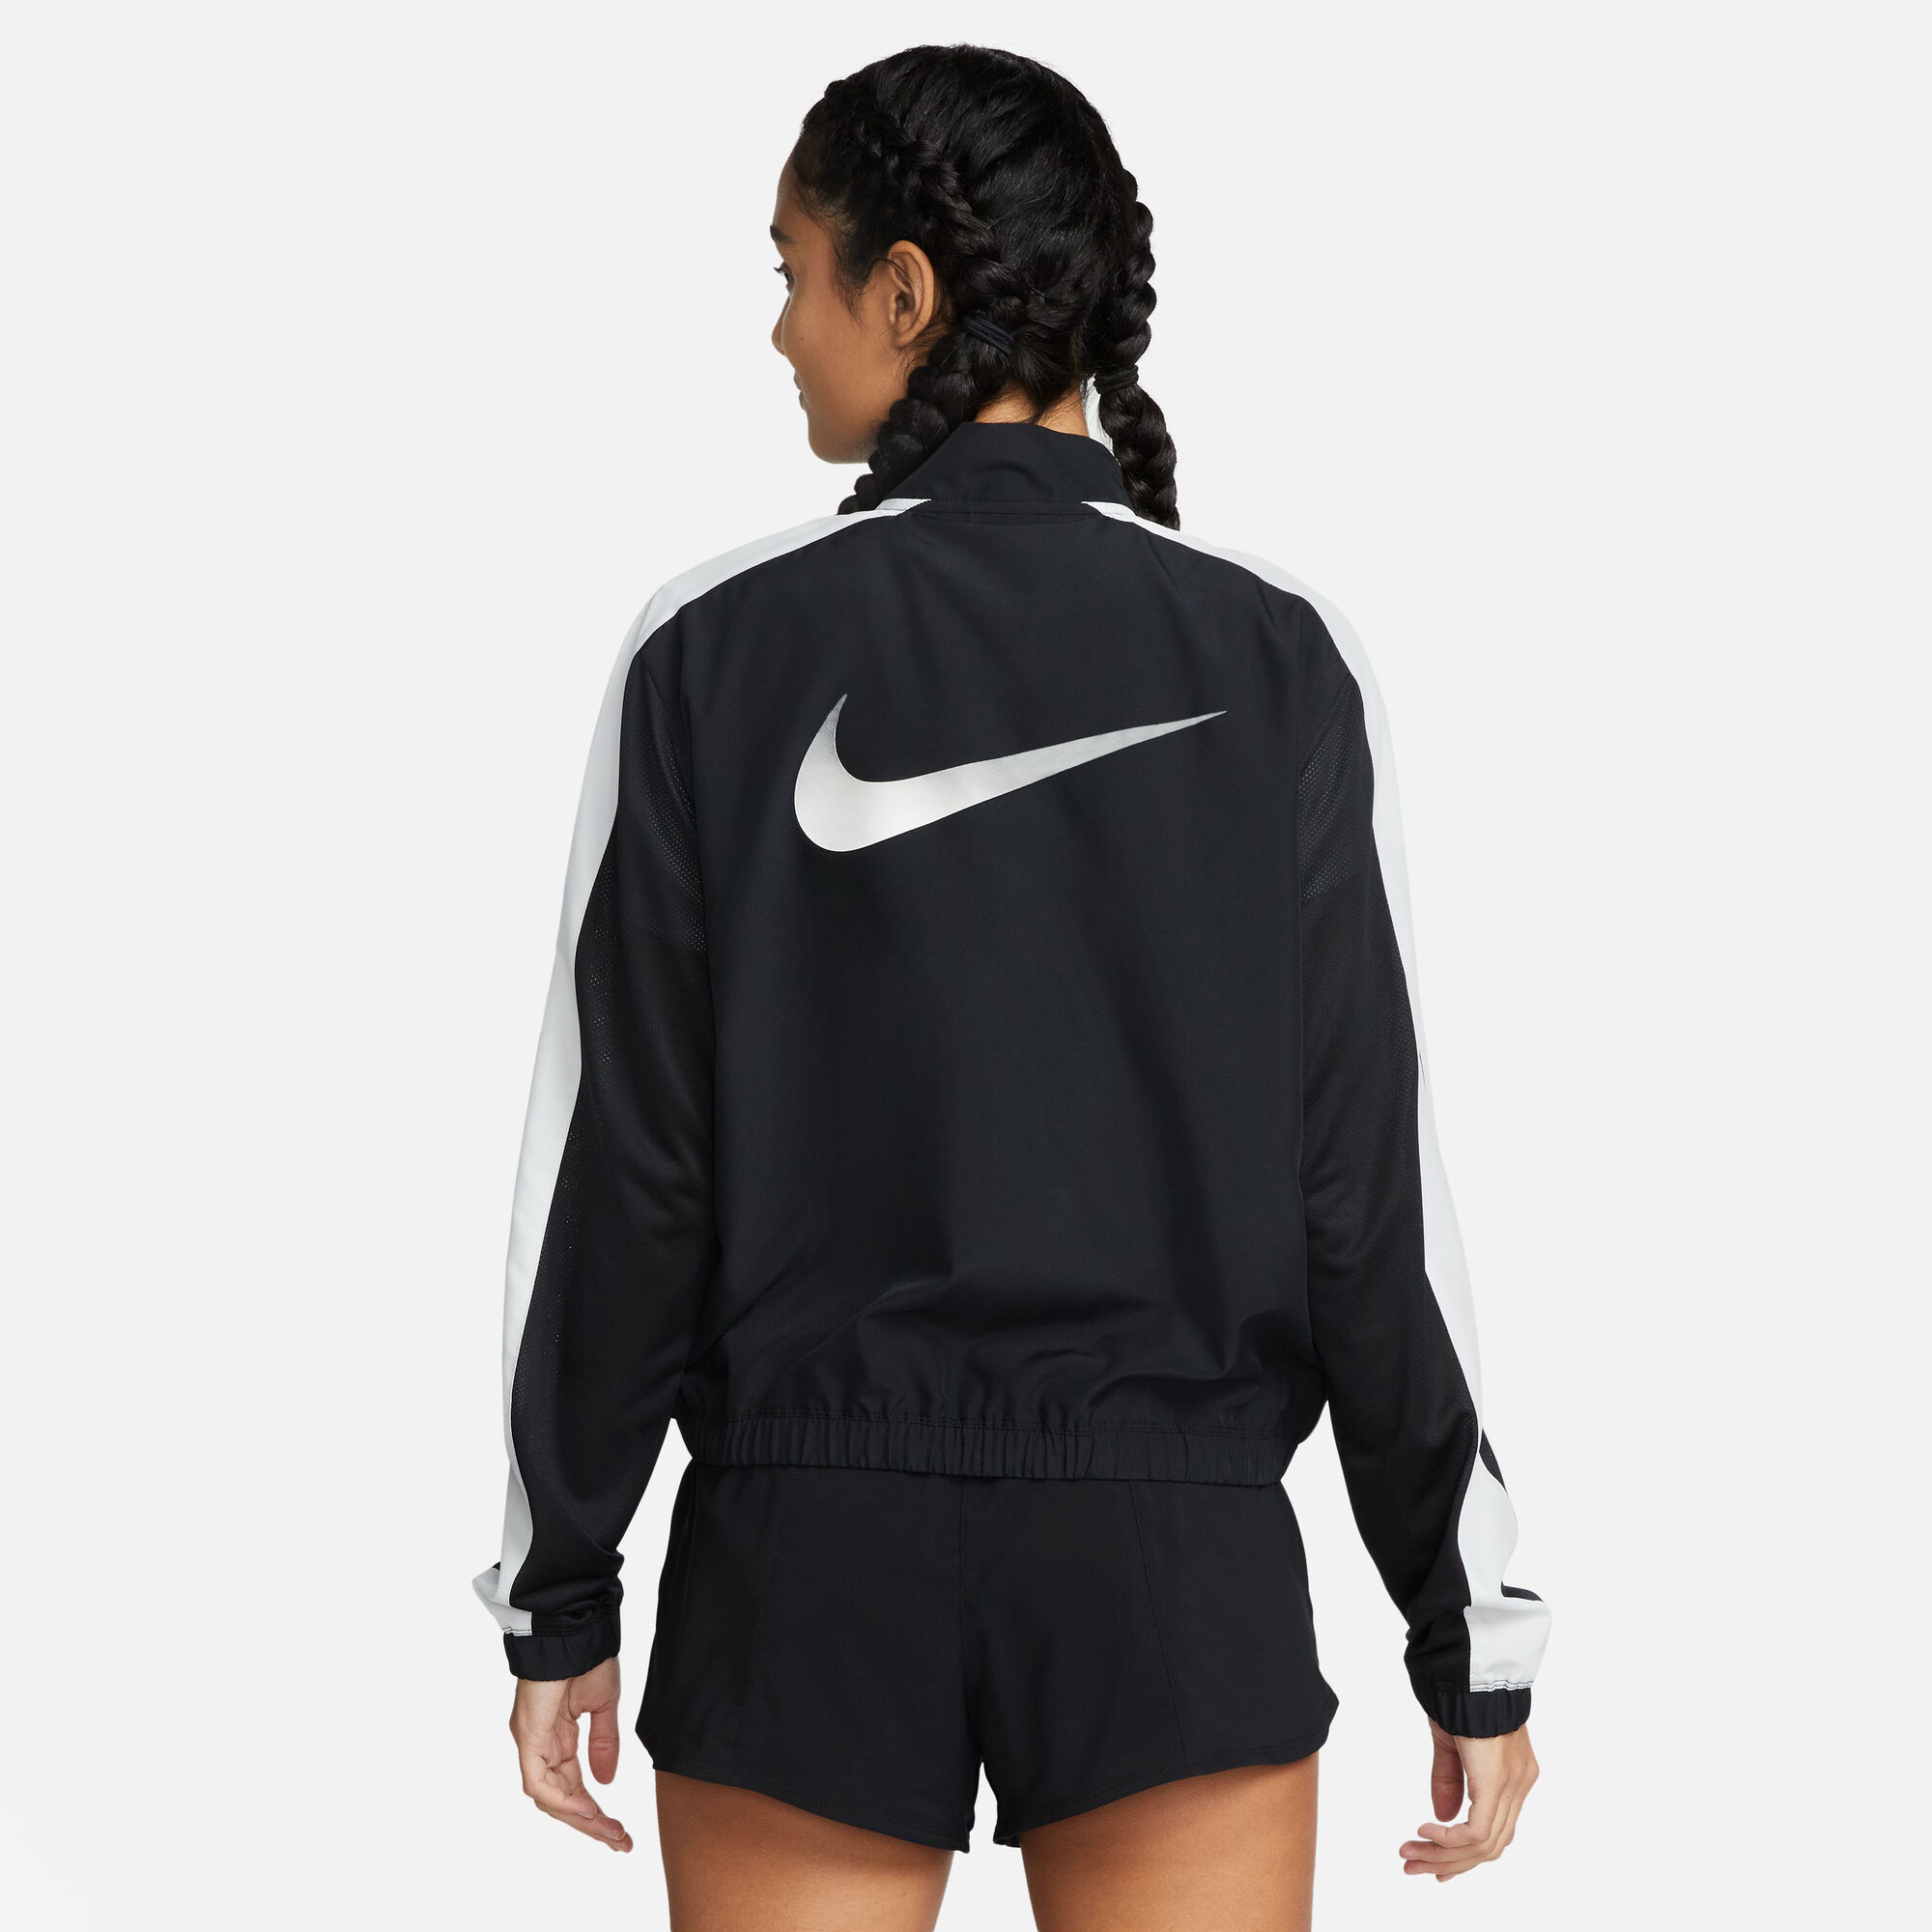 Buy Nike Swoosh Running Jacket Women Black, Grey online